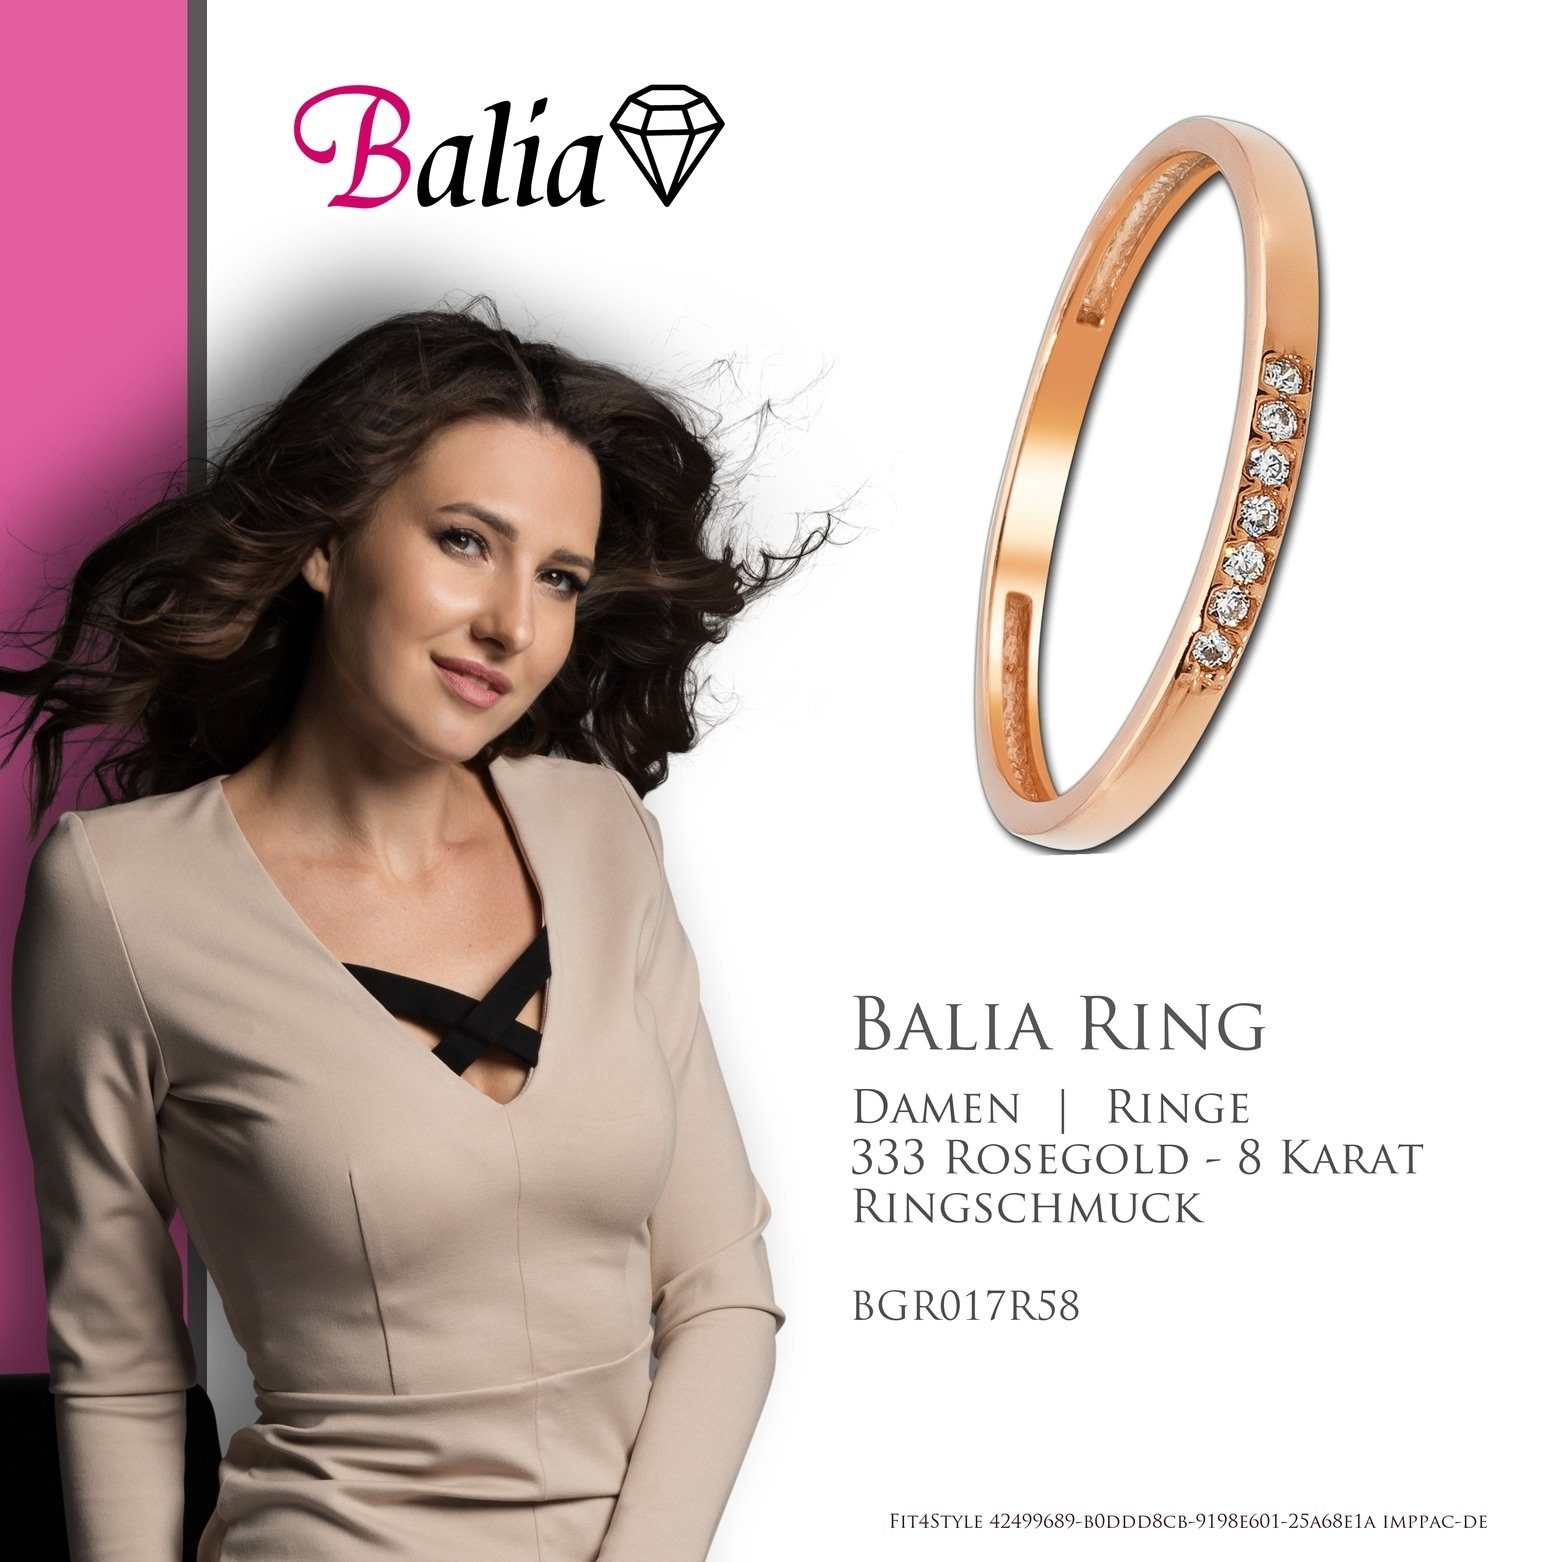 Rosegold 8 Damen Gold Zirkonias, Damen - 8Kt Gr.58 Karat Balia (Fingerring), 7 58 Goldring Blatt Ringe, Balia (18,4) Ring 333